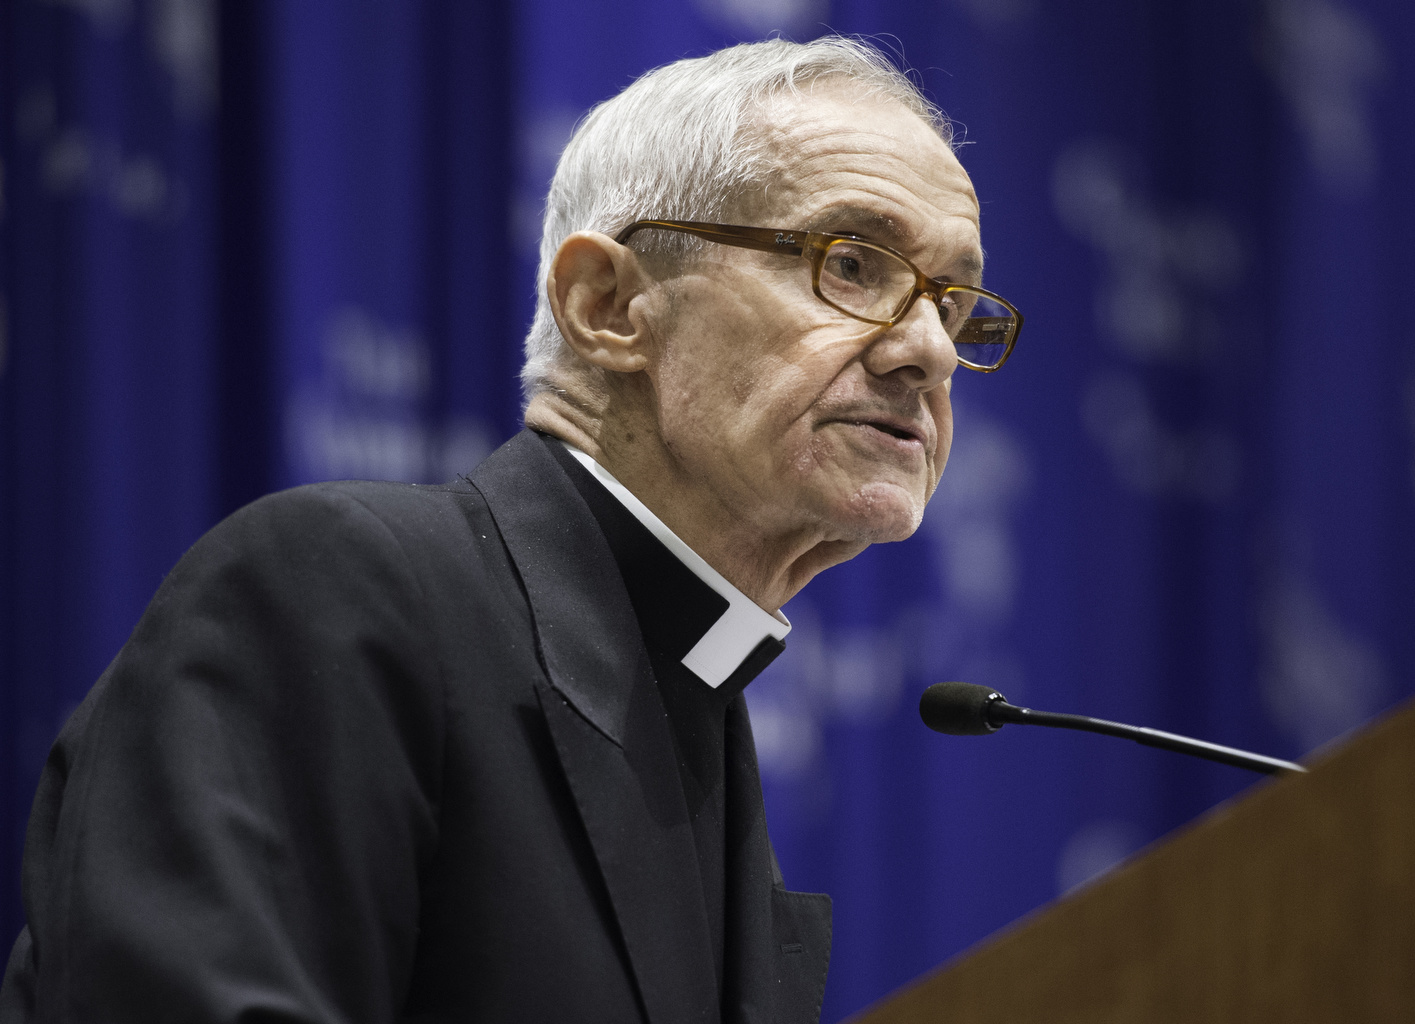 Violent extremists tarnish image of their own faith, cardinal says